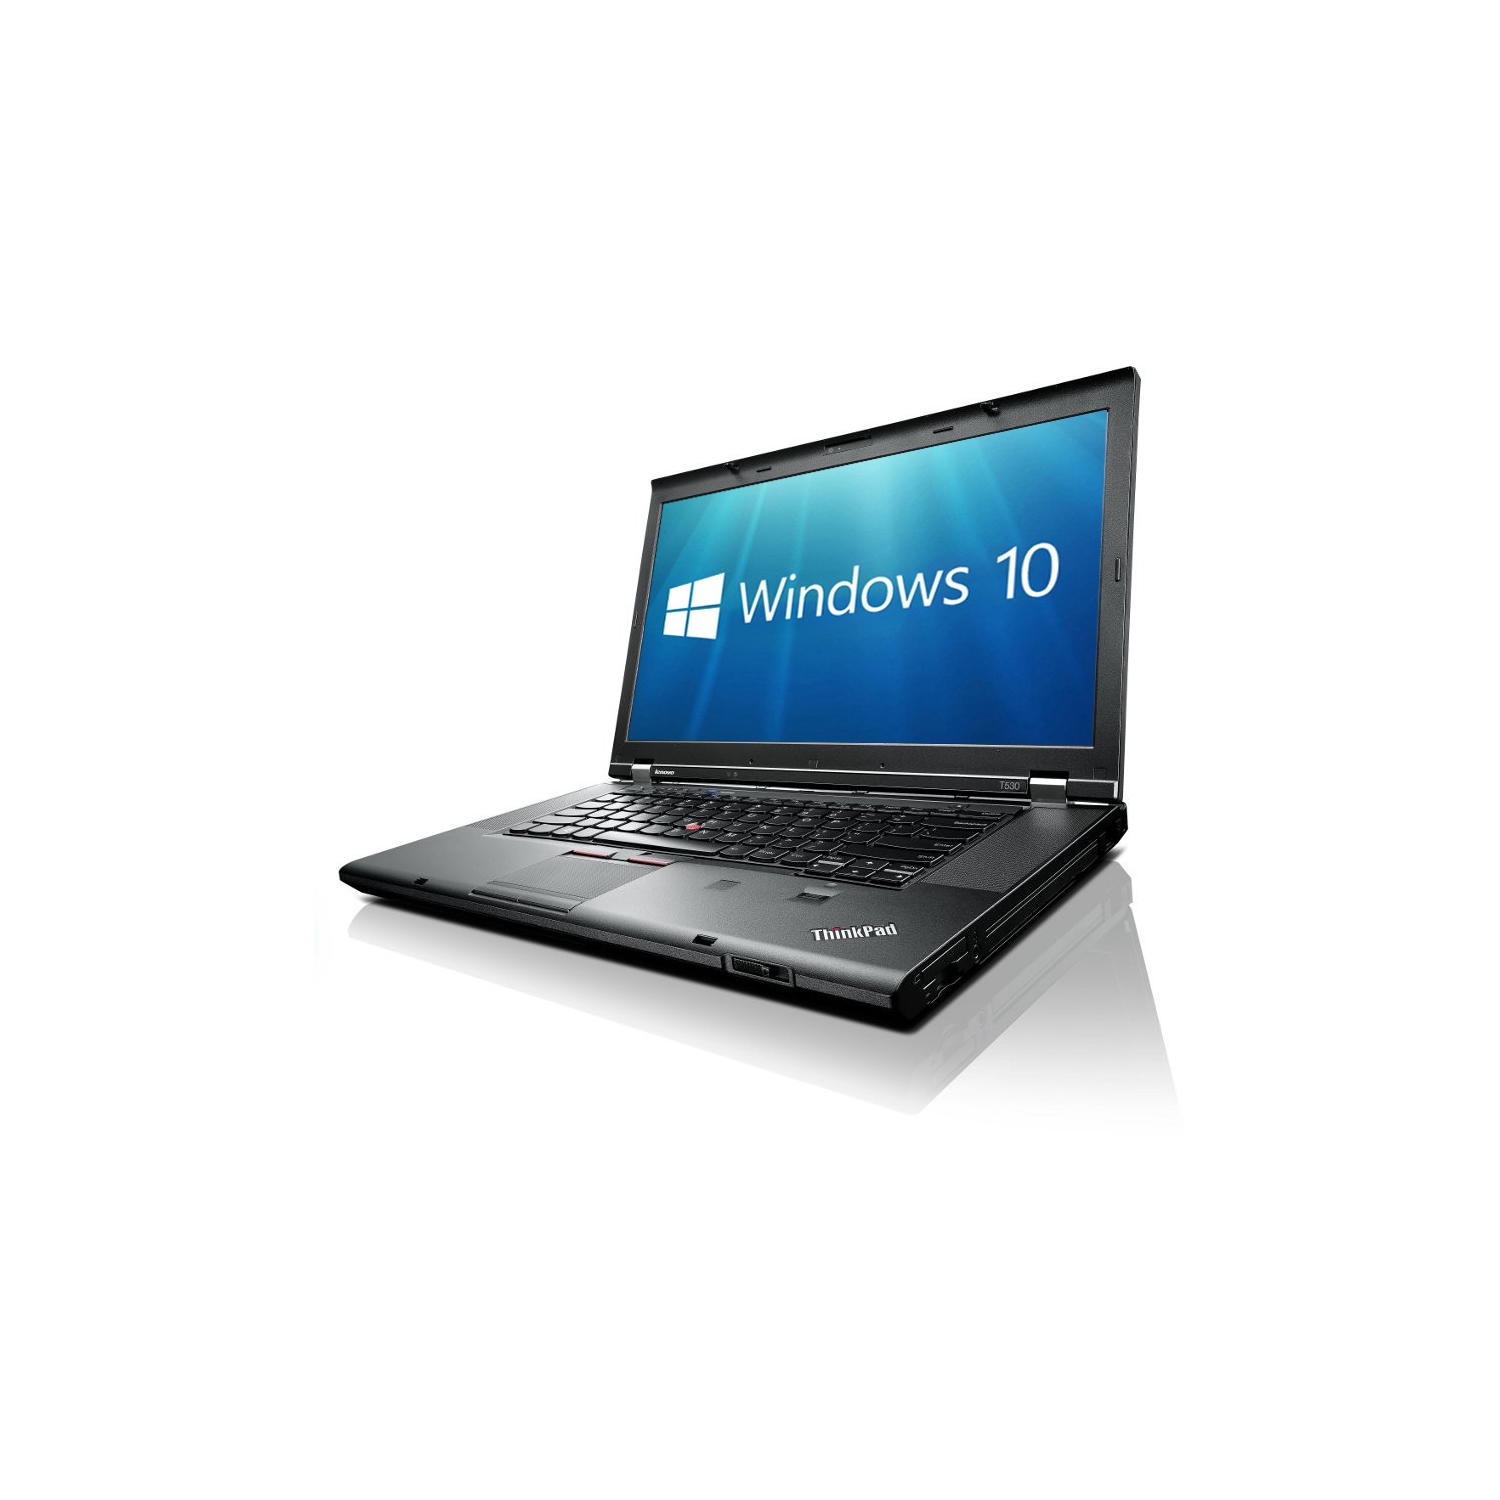 Refurbished (Good) - Lenovo T530, Intel i5, 8GB RAM, 480 GB SSD, Windows 10 Pro, 1 Year Warranty